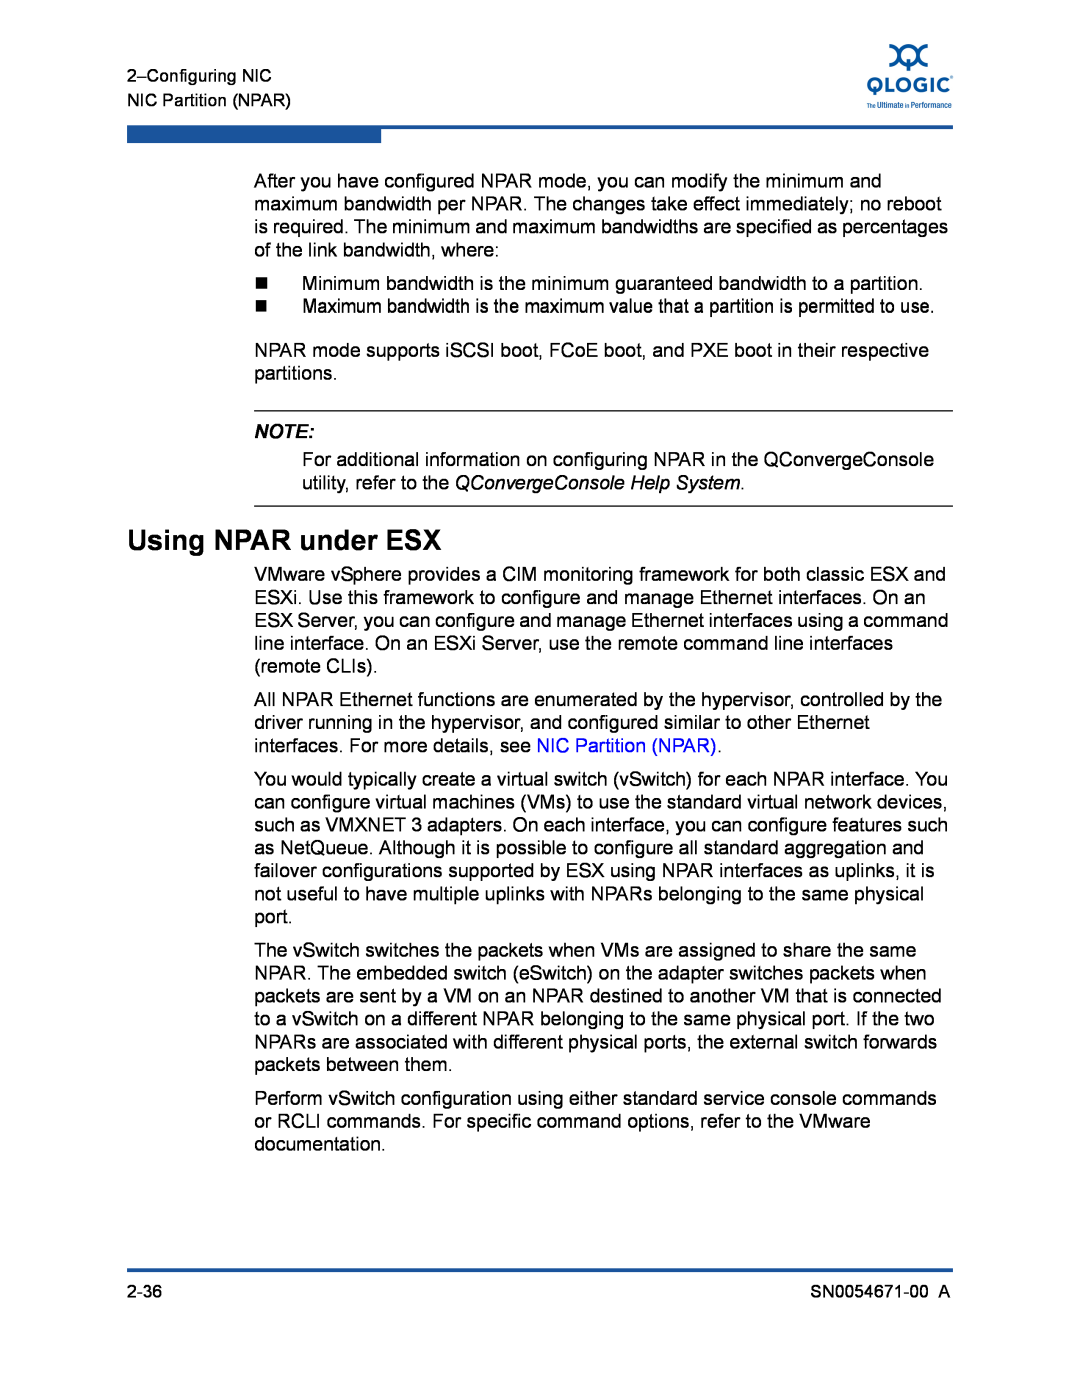 Q-Logic 8200, 3200 manual Using NPAR under ESX 